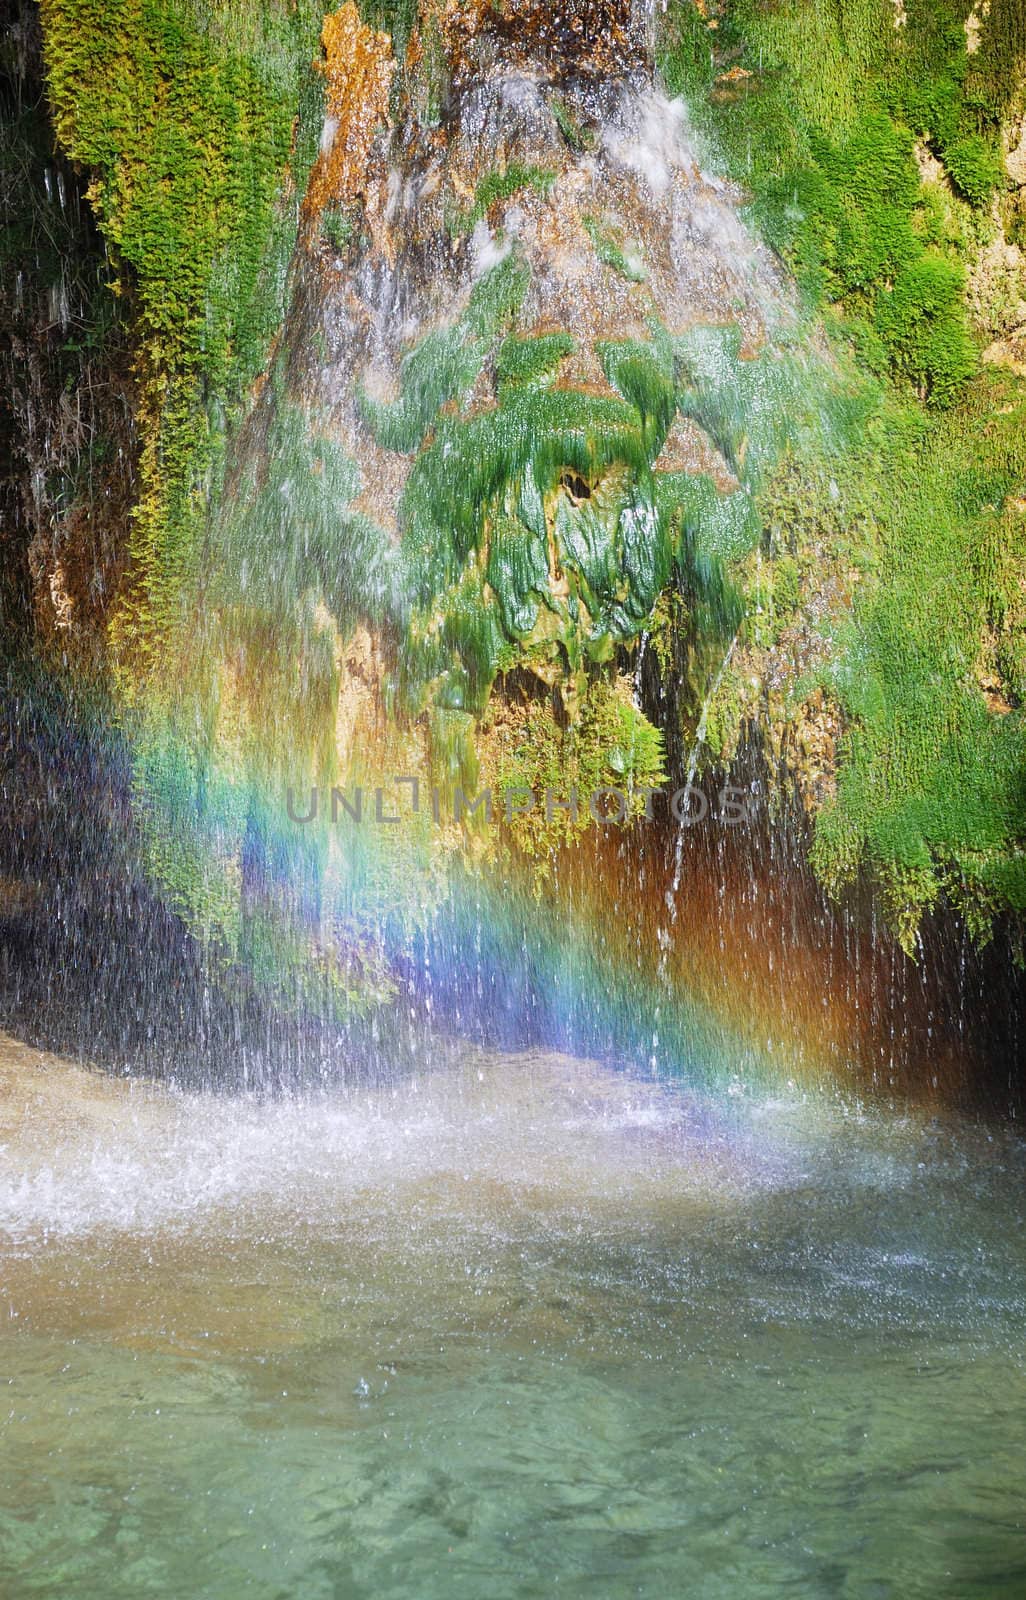 Rainbow on Lisine waterfall, tourist attraction in Serbia.